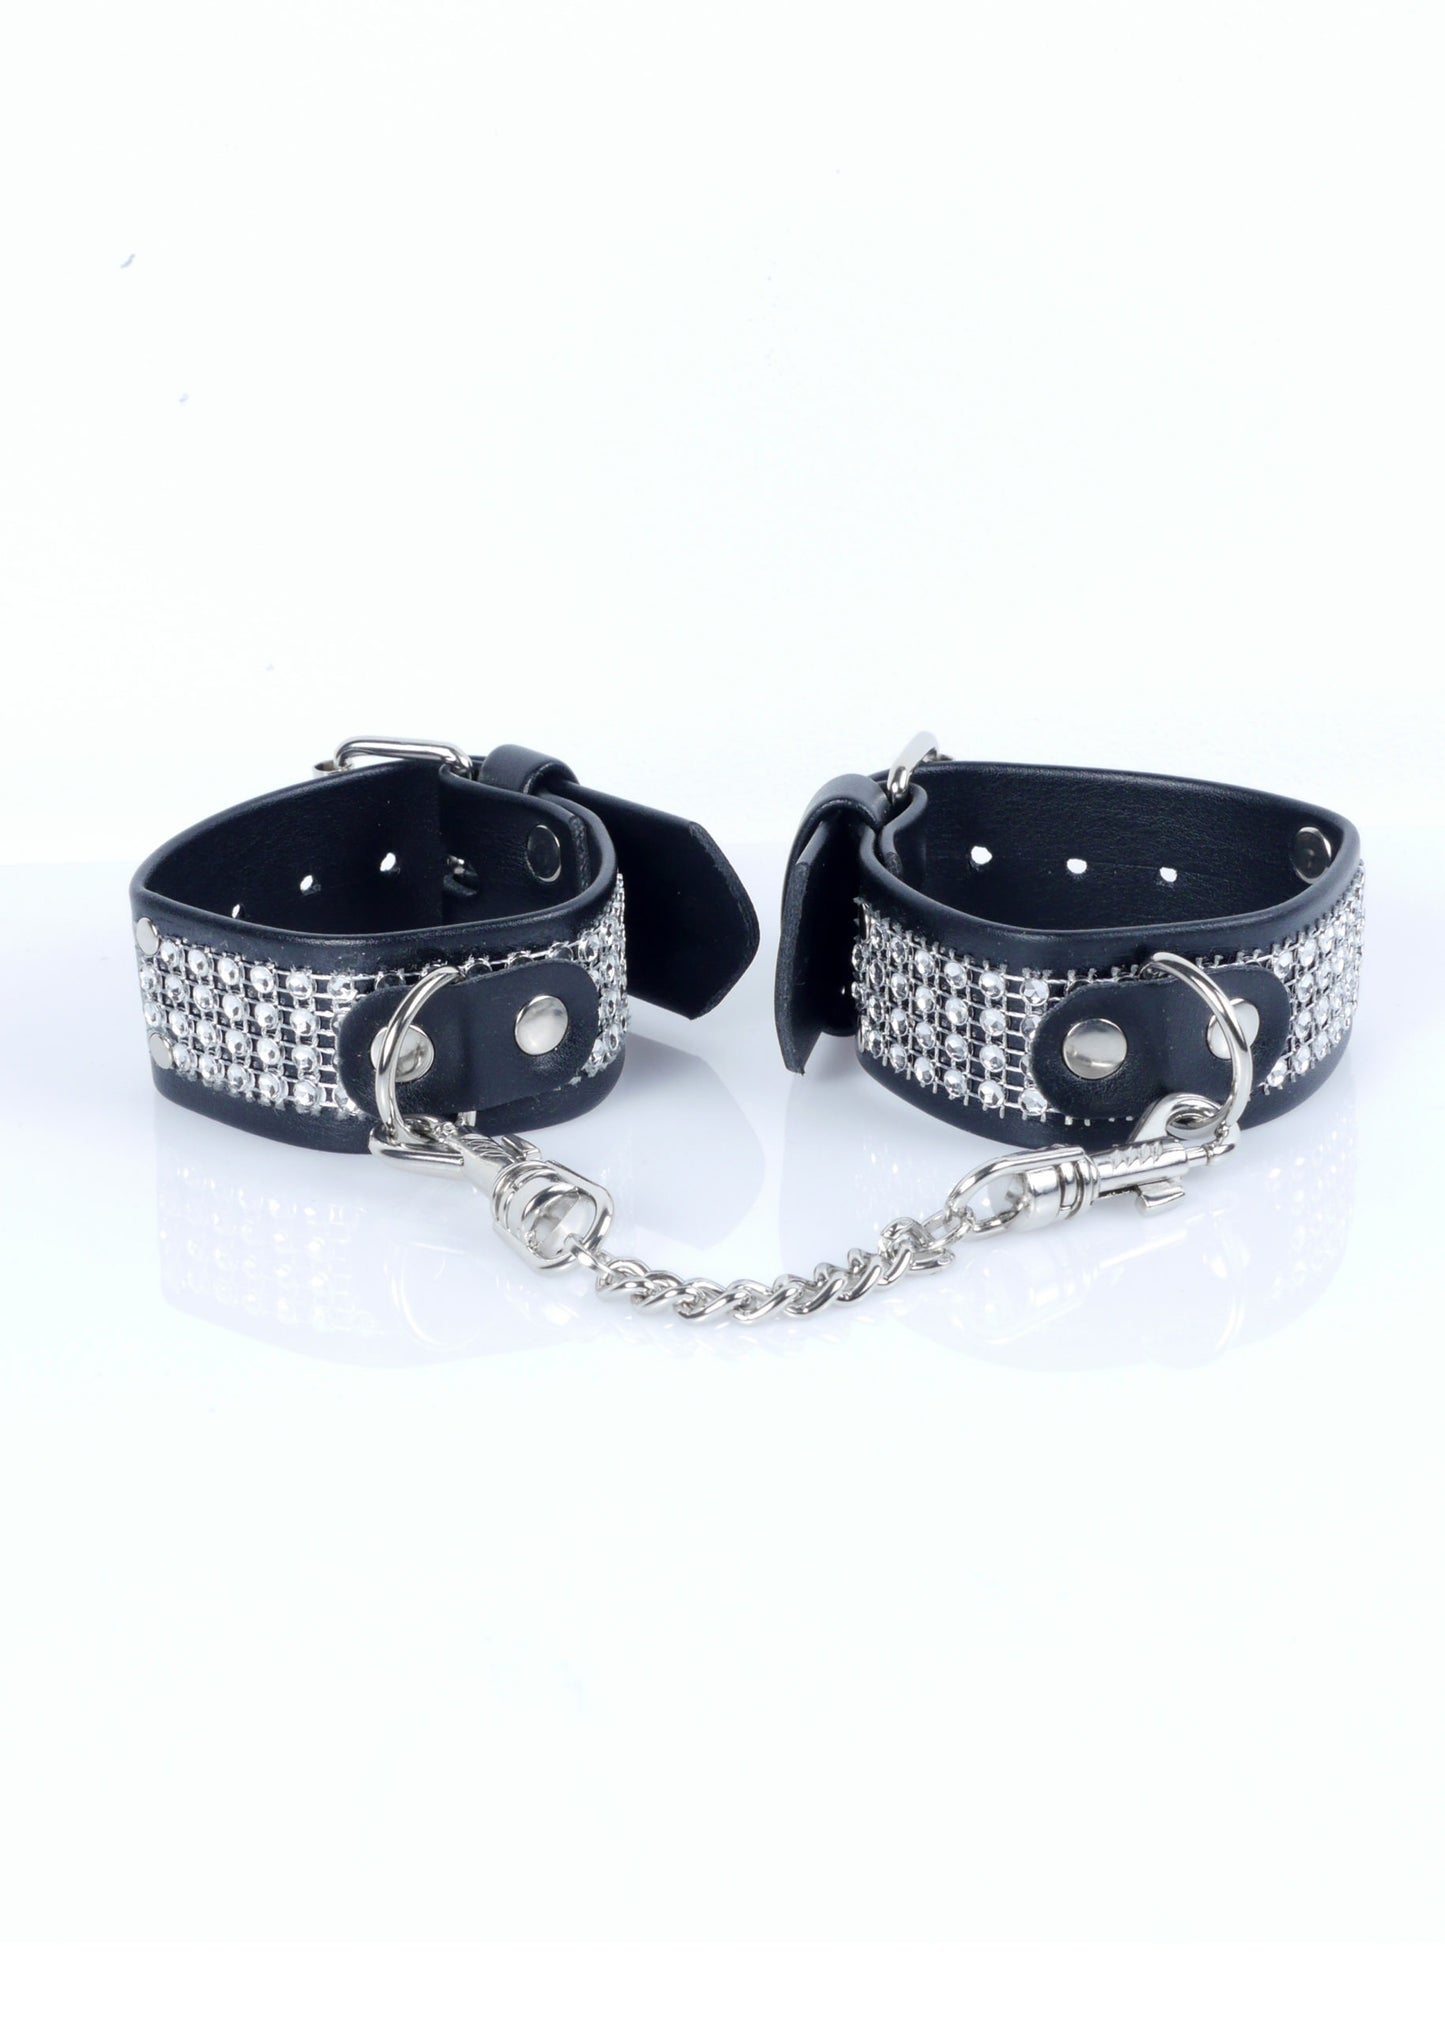 Bossoftoys - 33-00094 - Luxury Handcuffs - Wristcuffs with Diamond Stones - for Luxury Bondage games